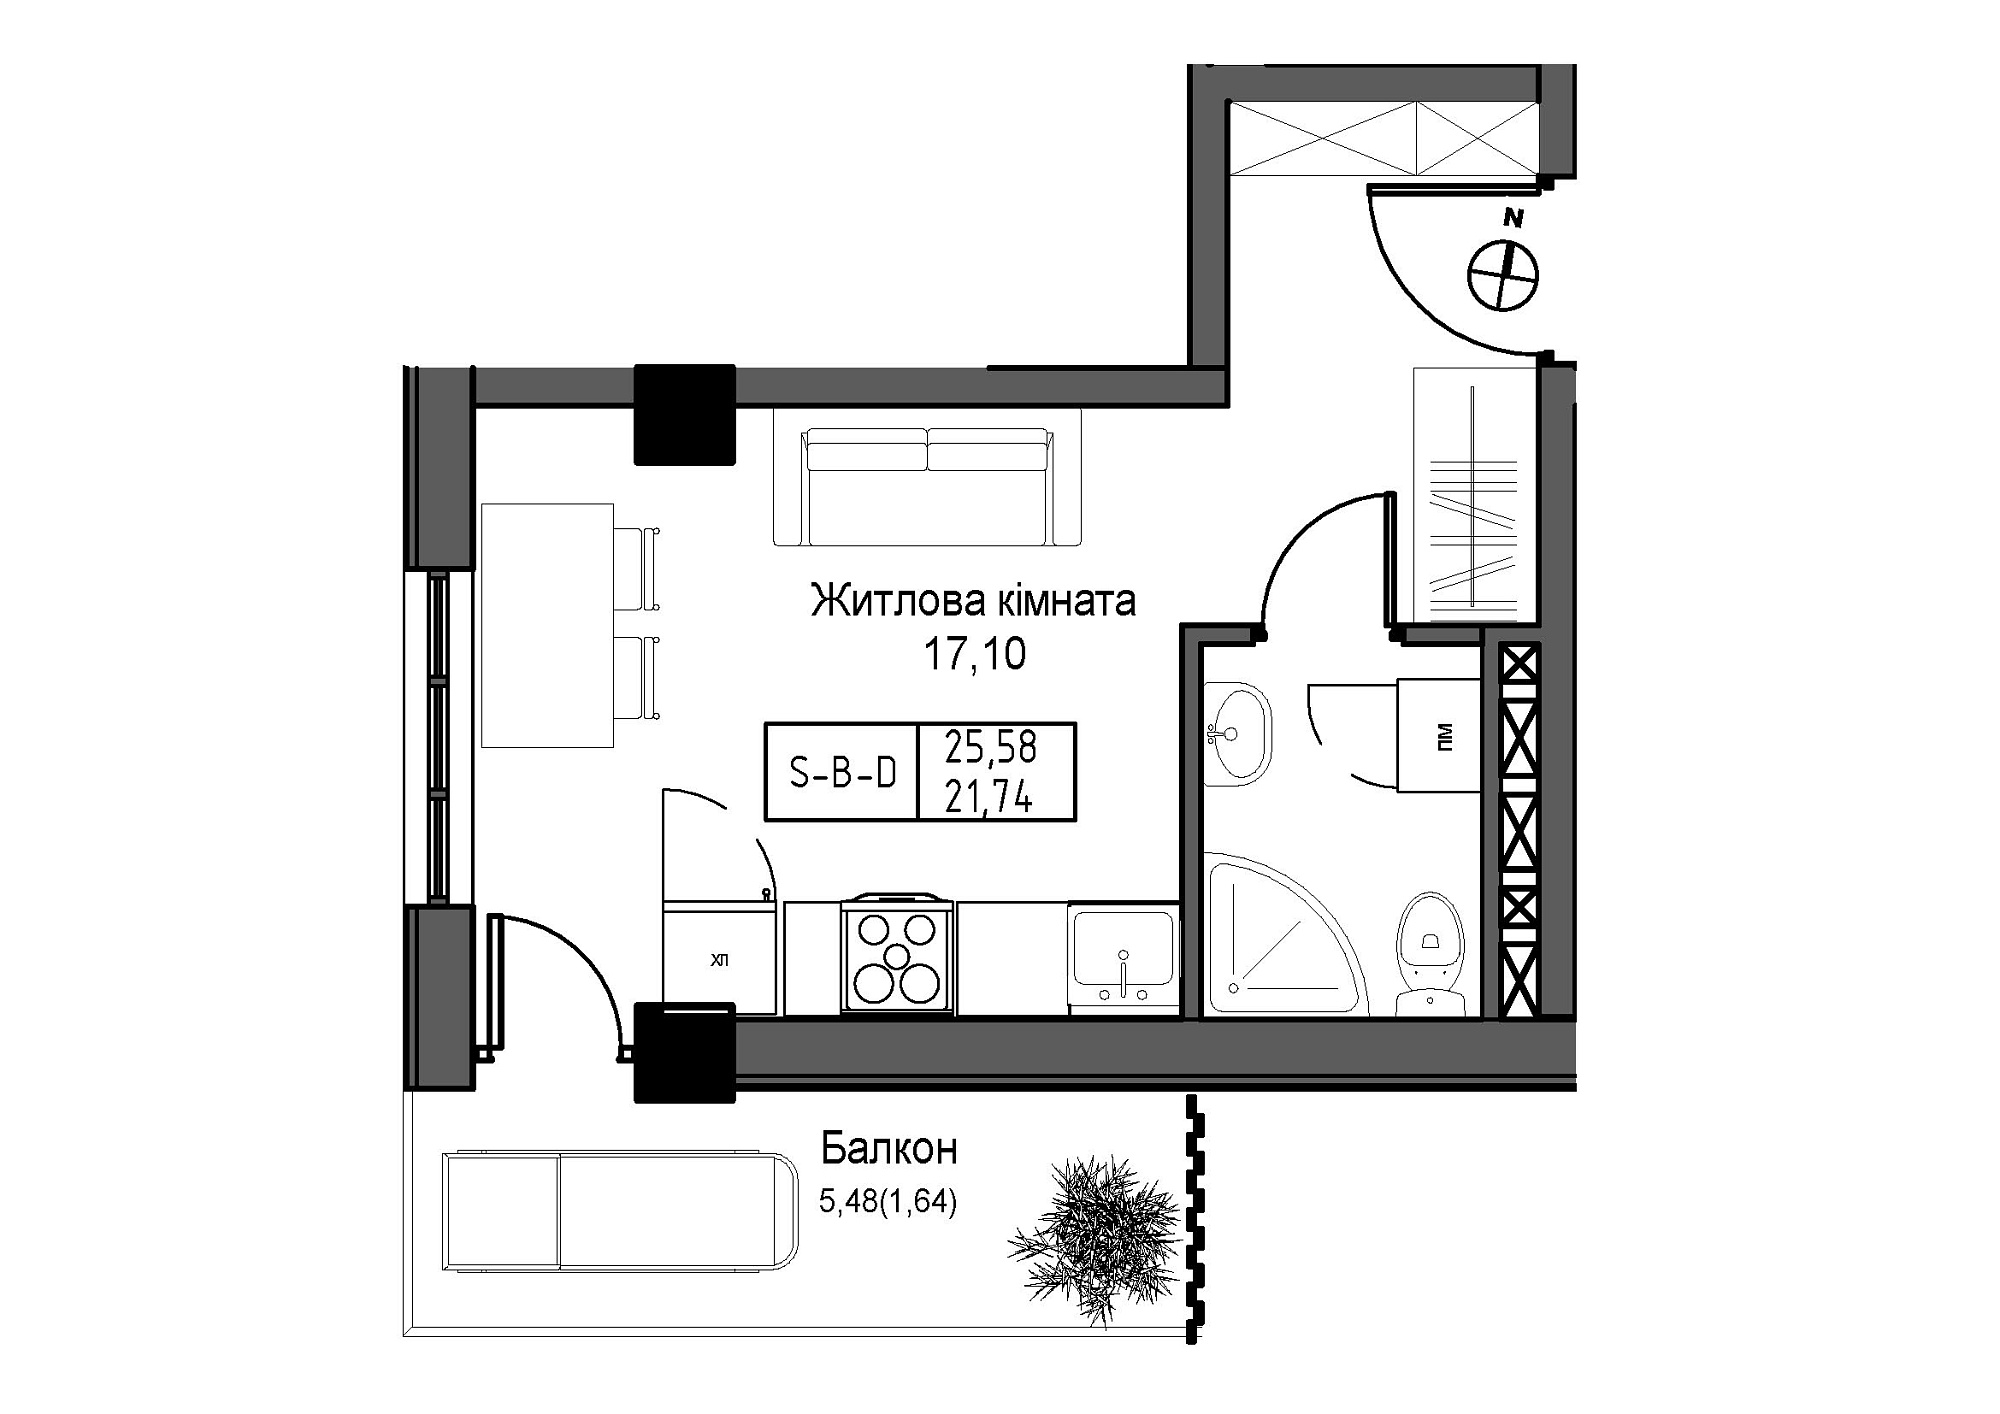 Планування Smart-квартира площею 21.74м2, UM-007-07/0010.